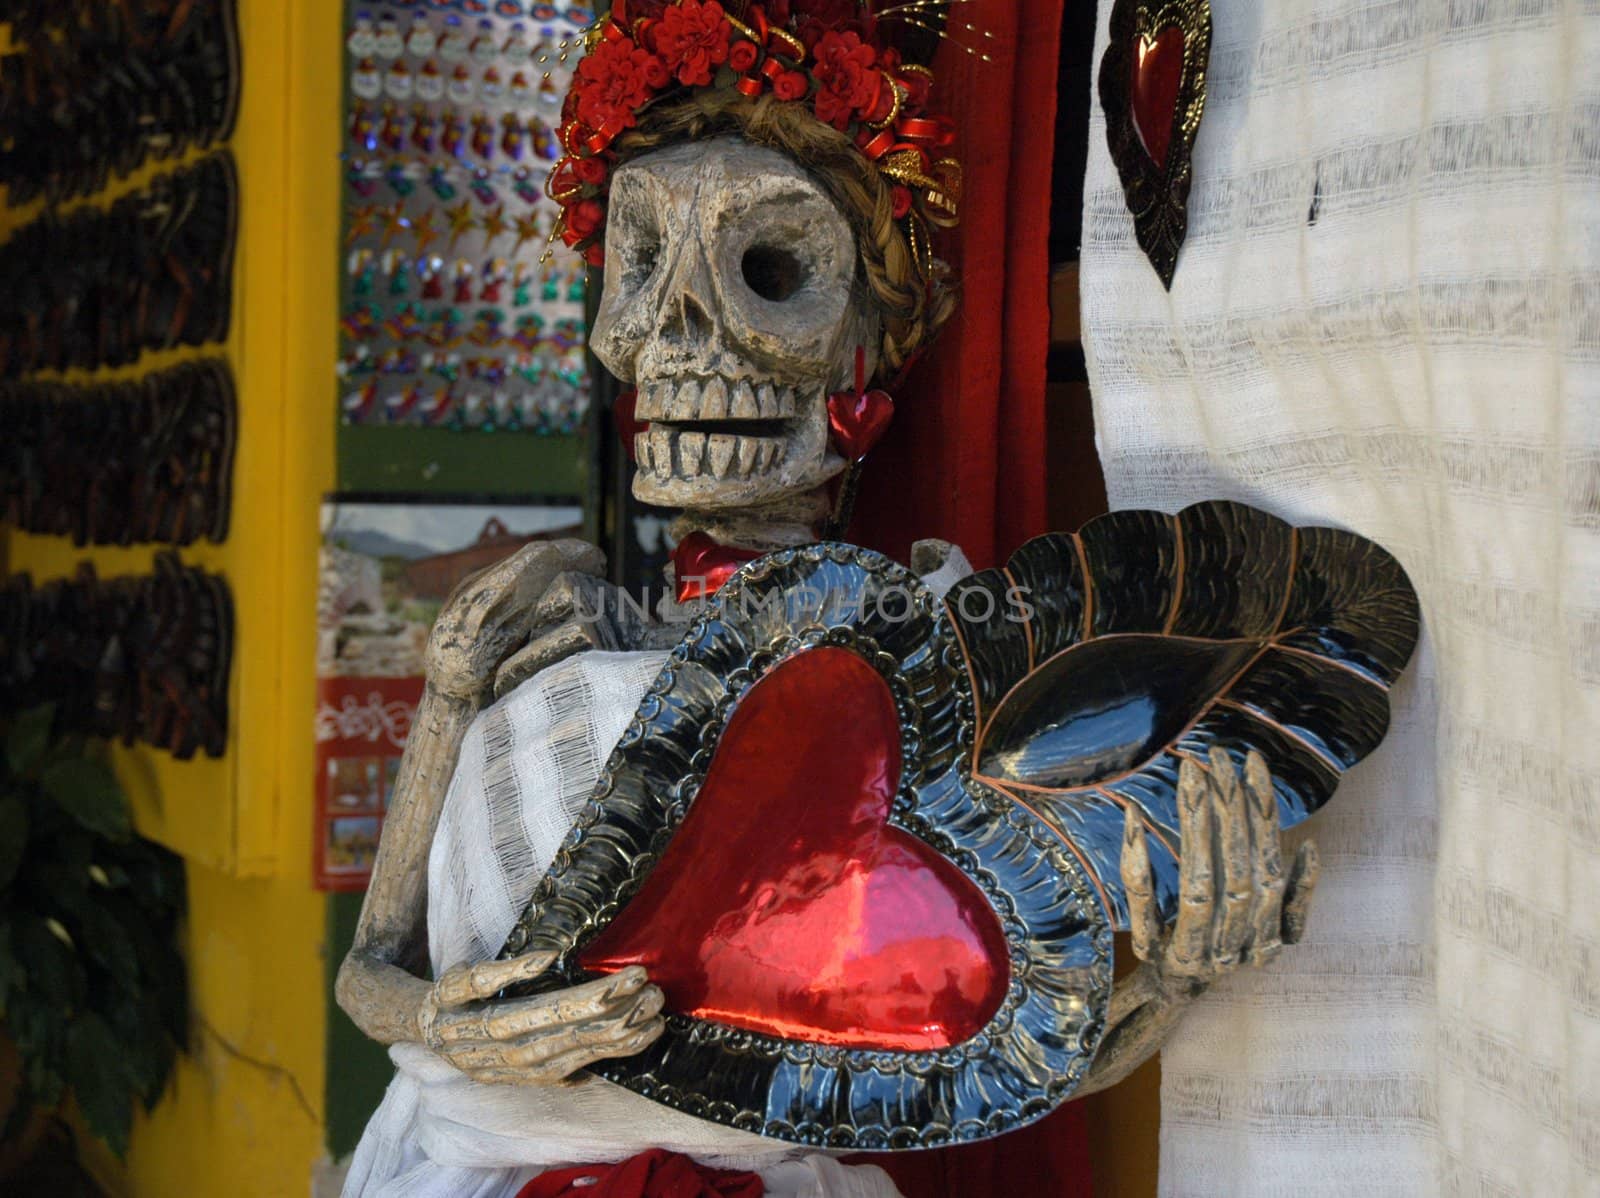 Souvenirs in Oaxaca Mexico by haak78